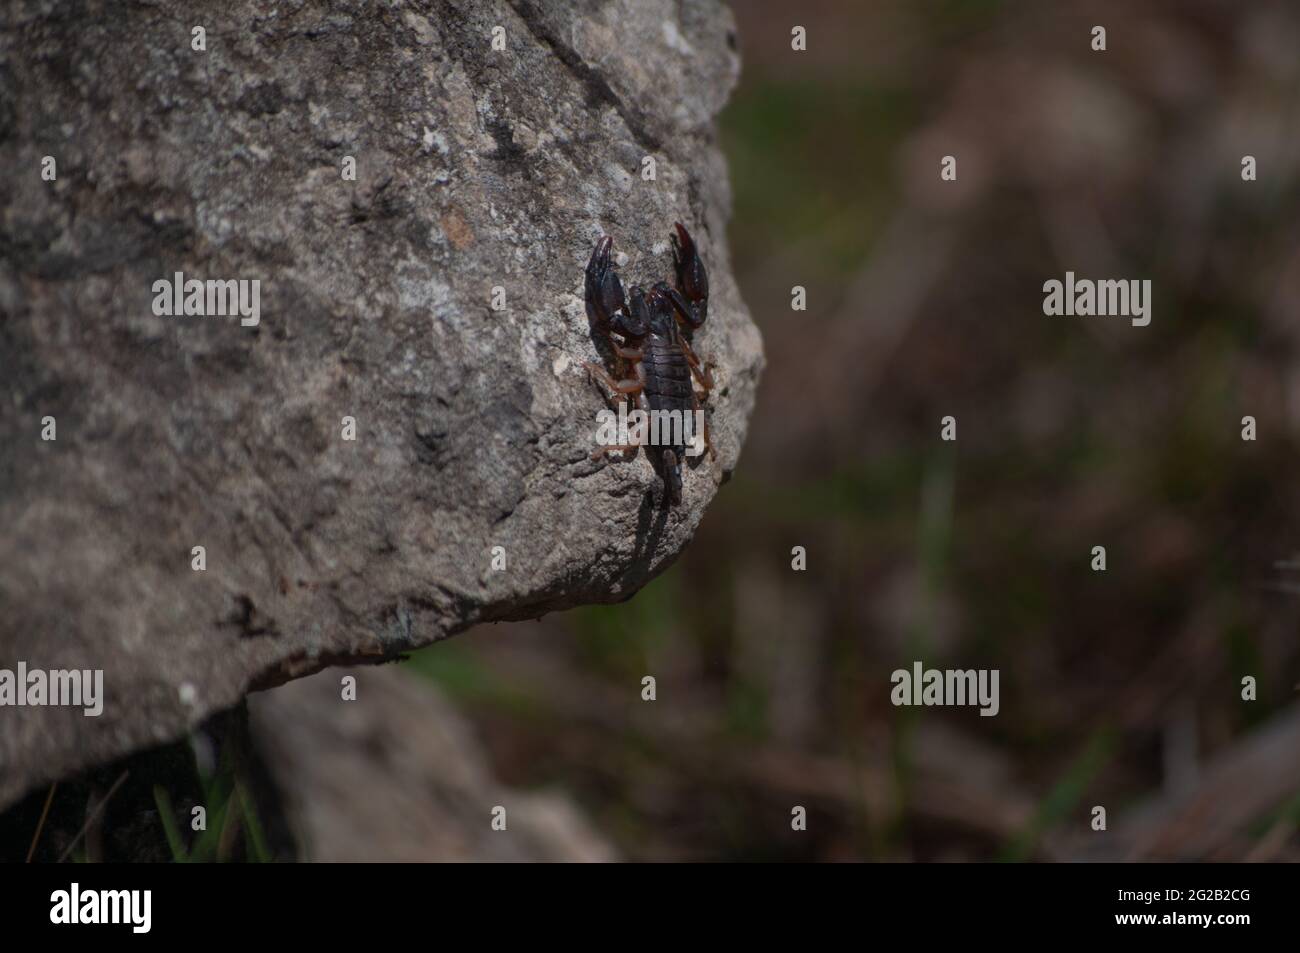 Selective focus shot of a Euscorpius flavicaudis (European yellow-tailed scorpion) Stock Photo